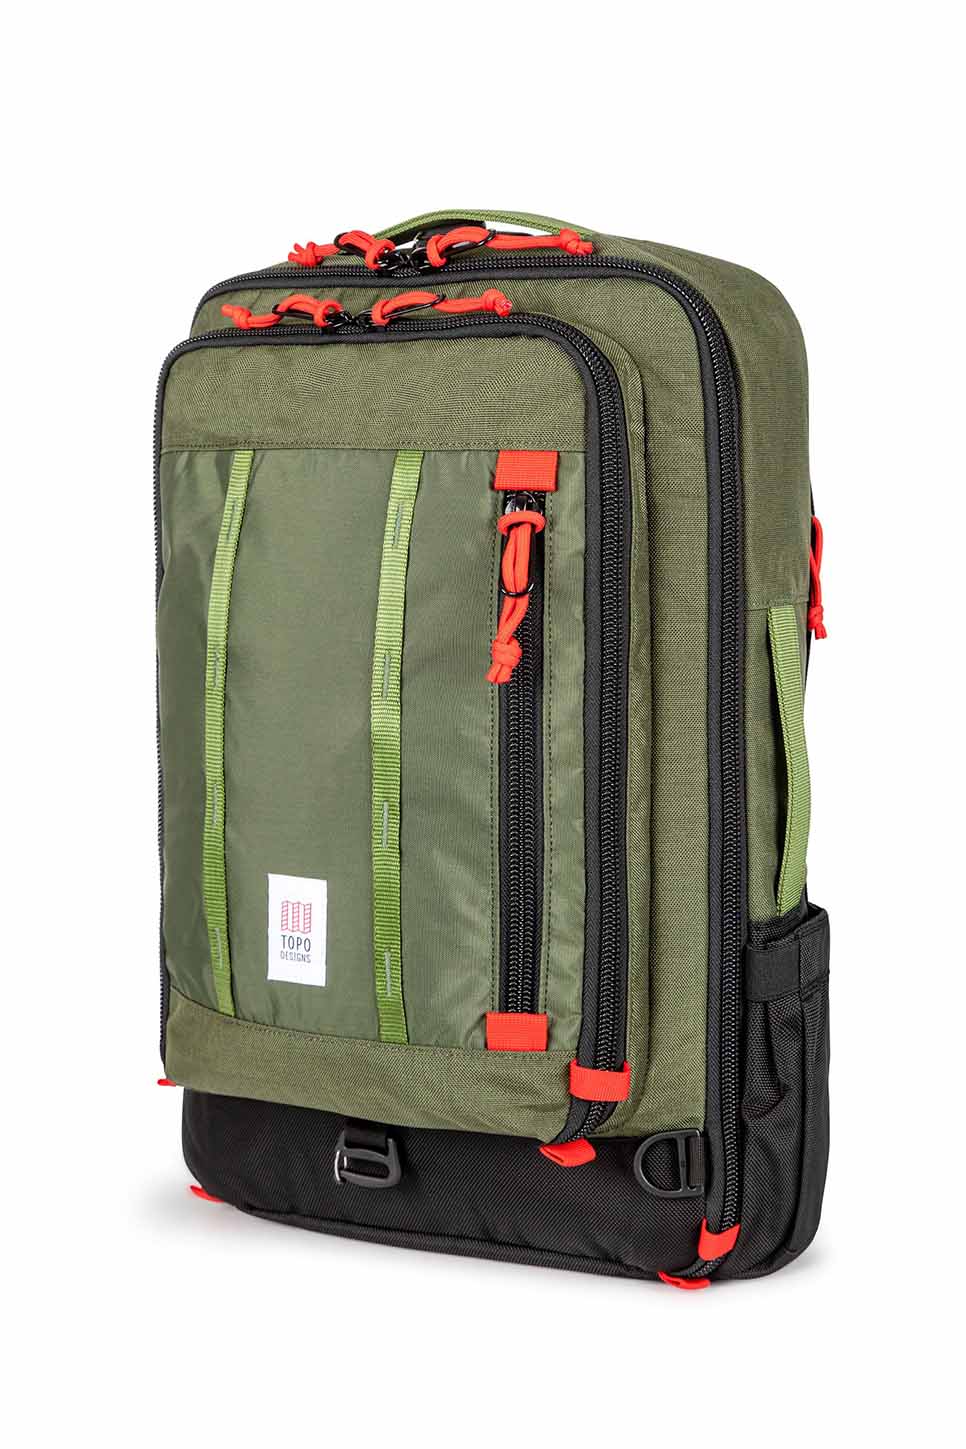 Topo - Global Travel Bag 30L - Olive/Olive - Profile